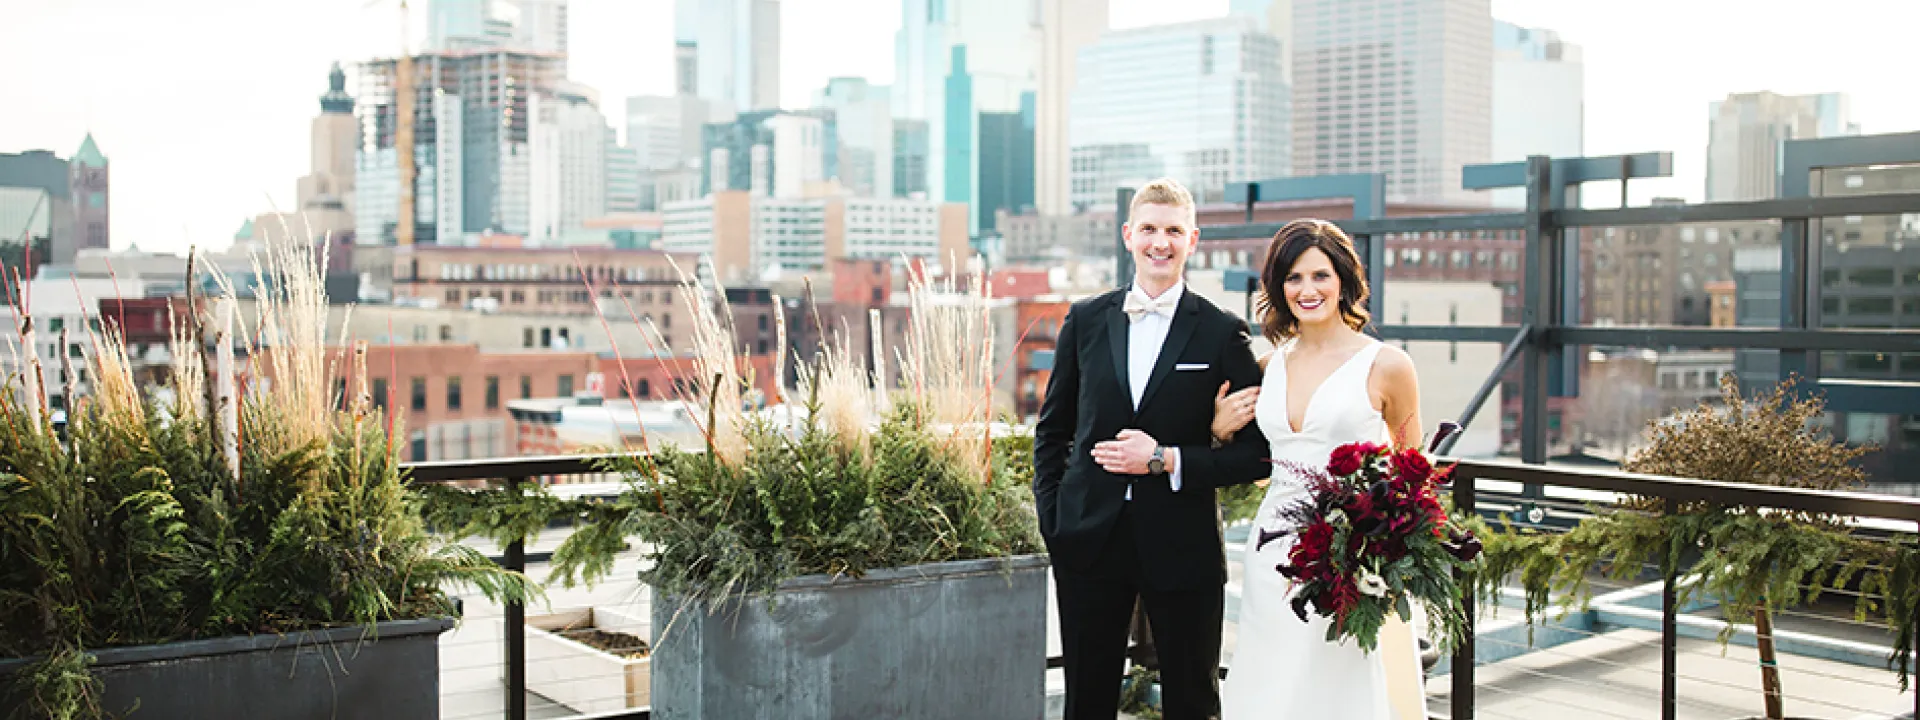 Minnesota Wedding with Minneapolis Skyline